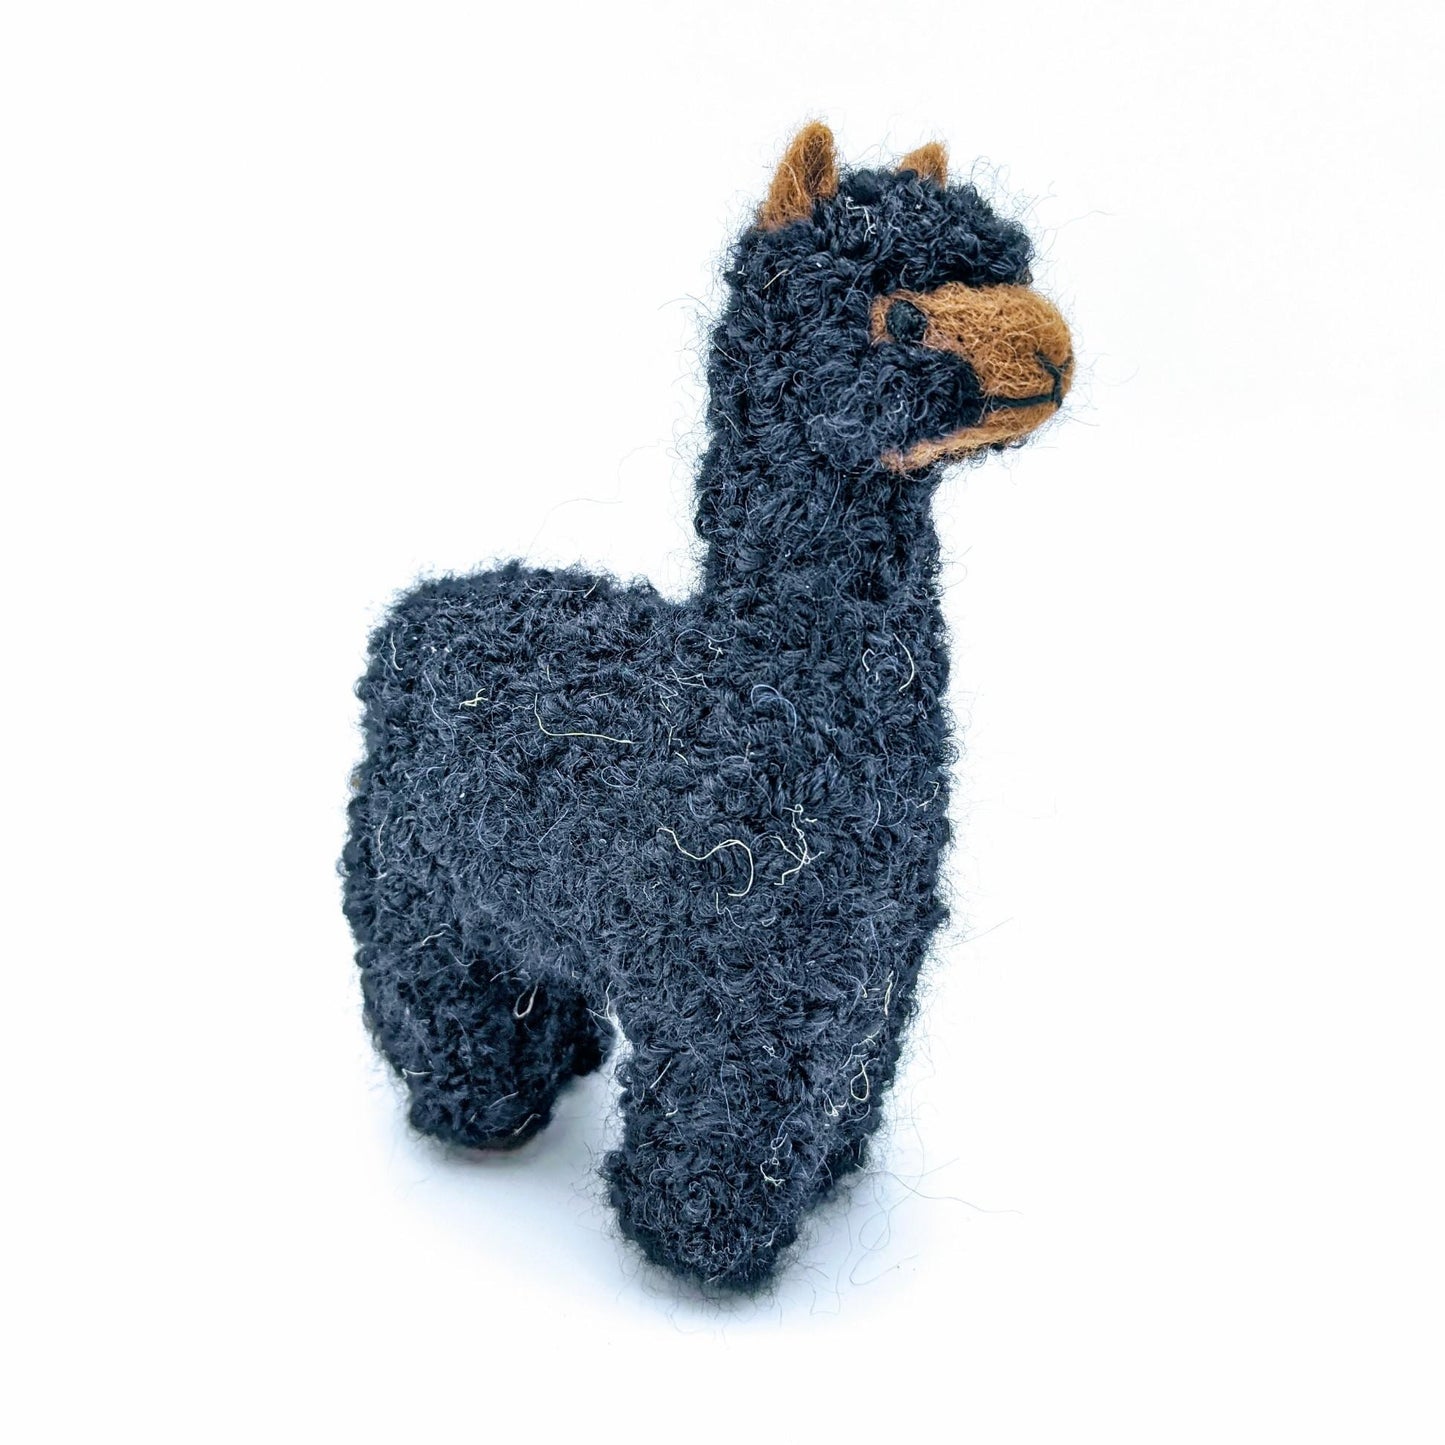 Black baby alpaca figure